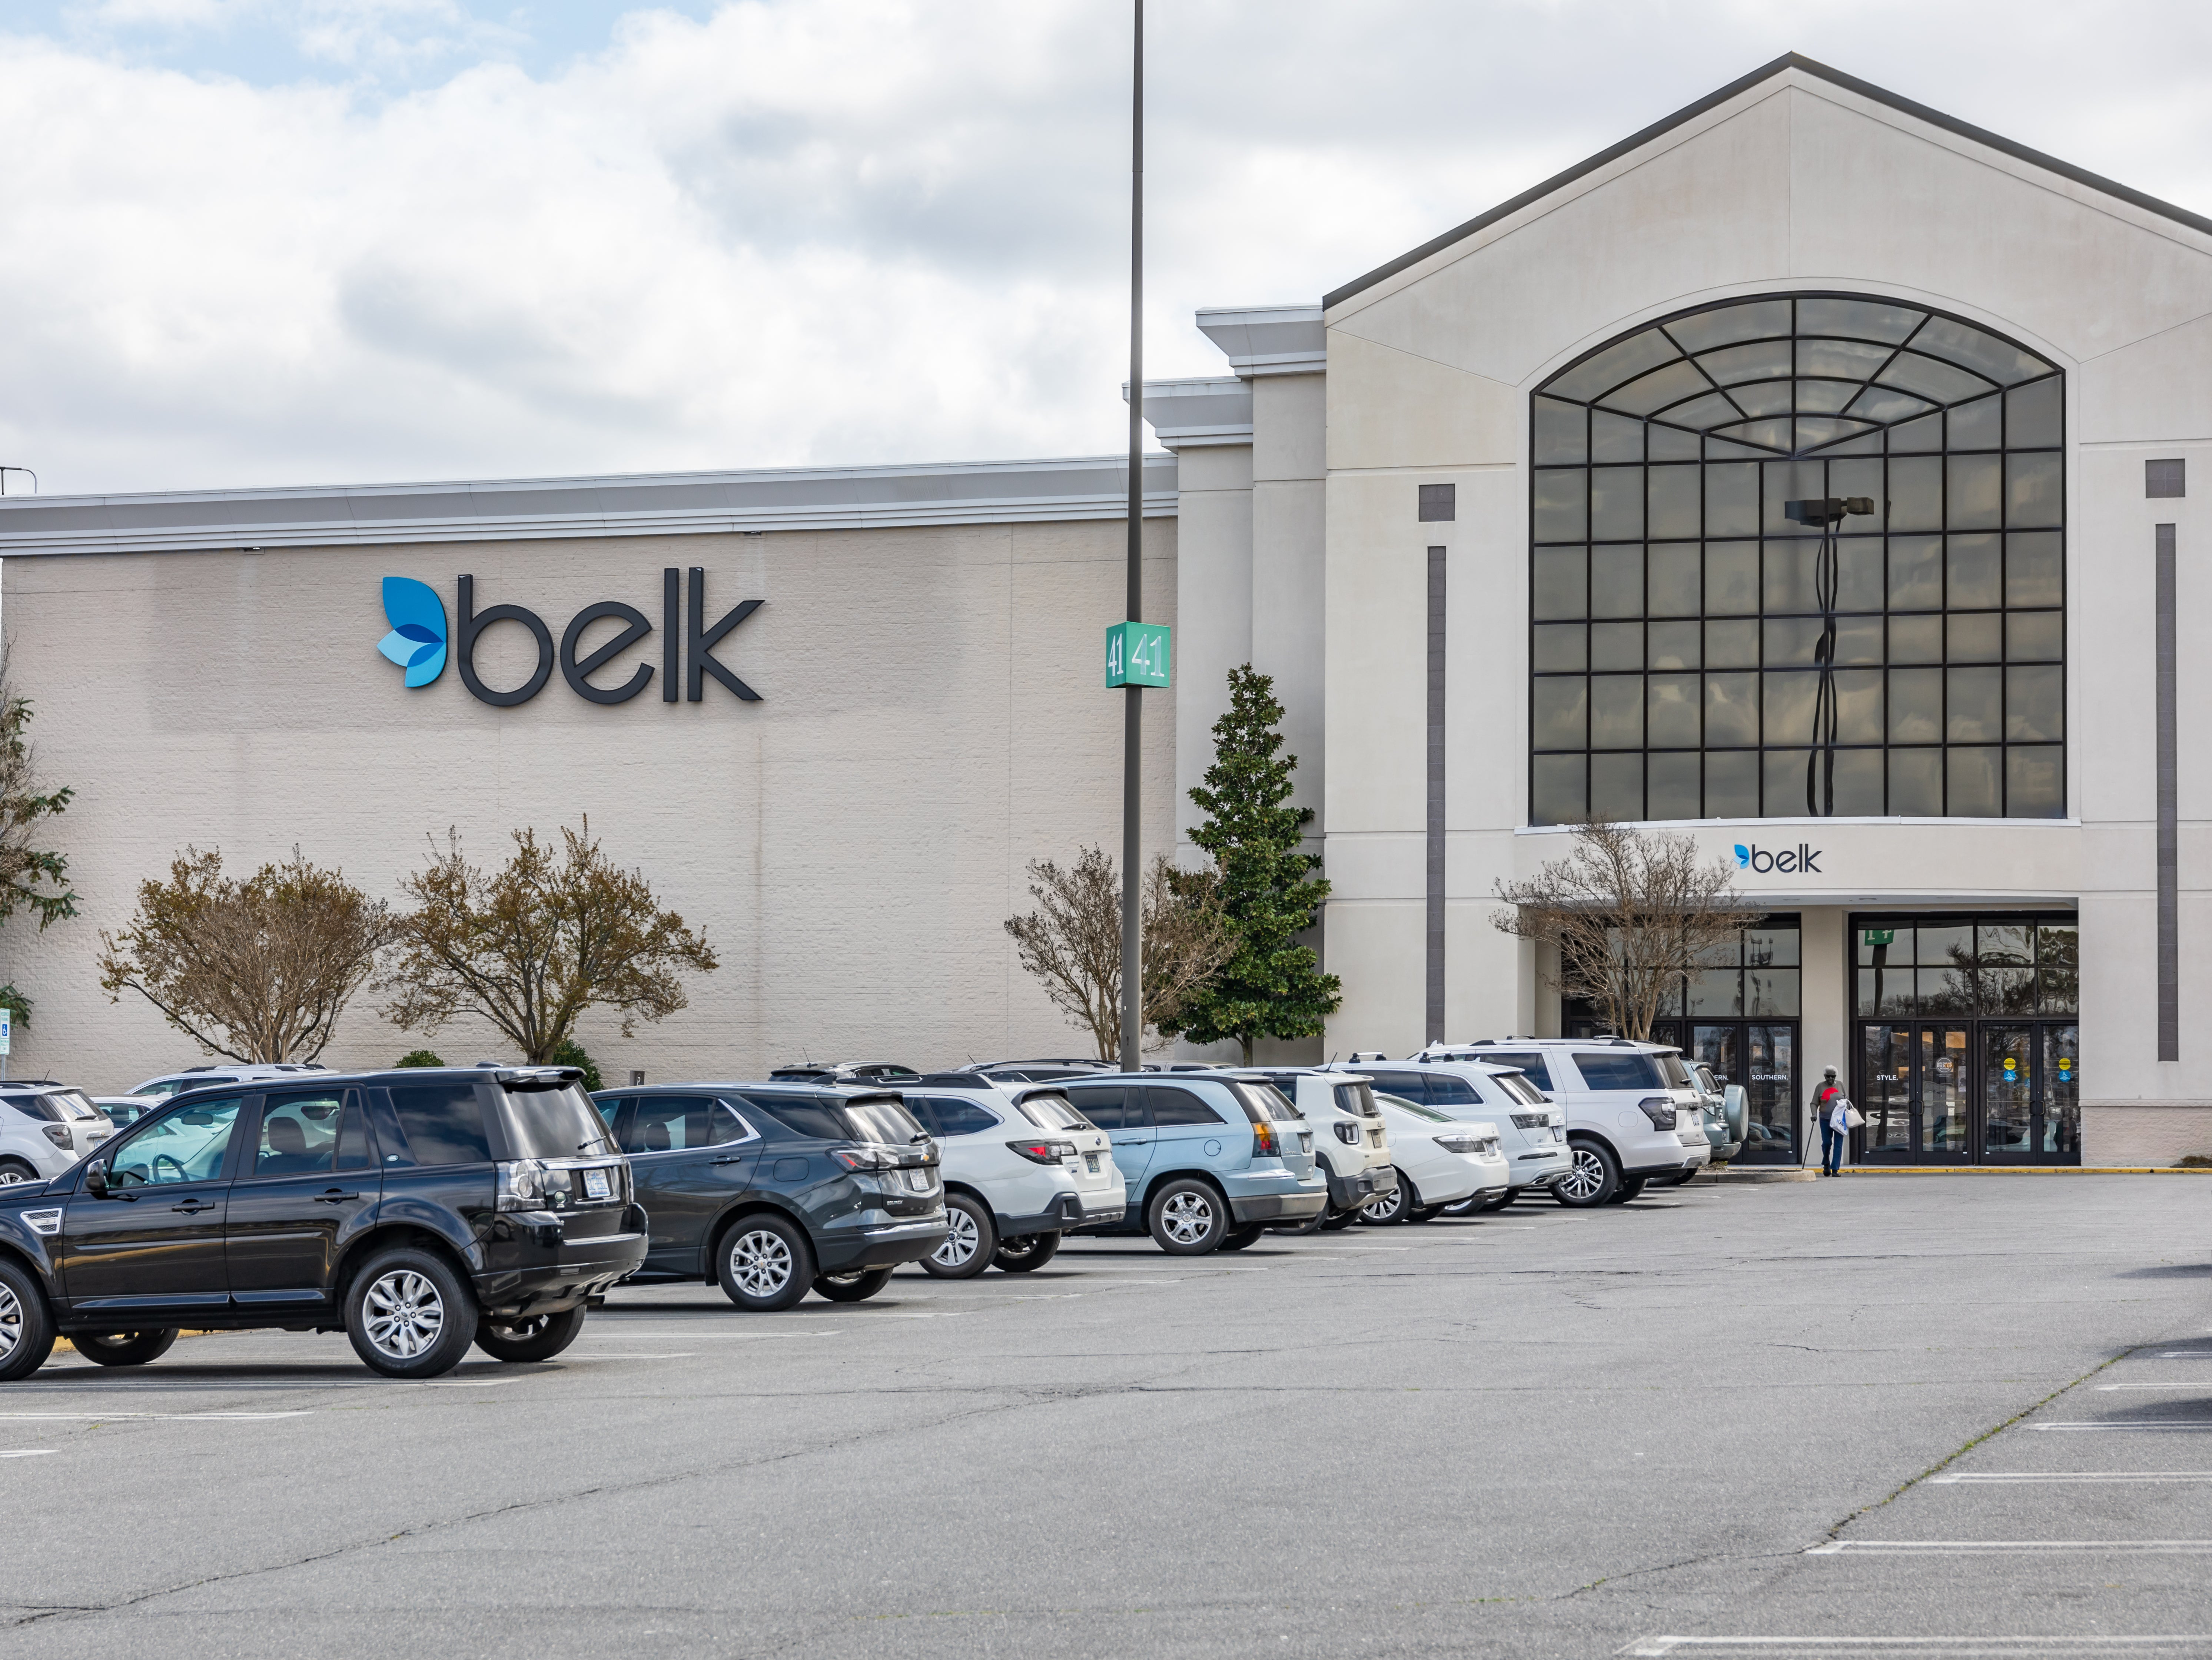 Belk department stores operate across the US